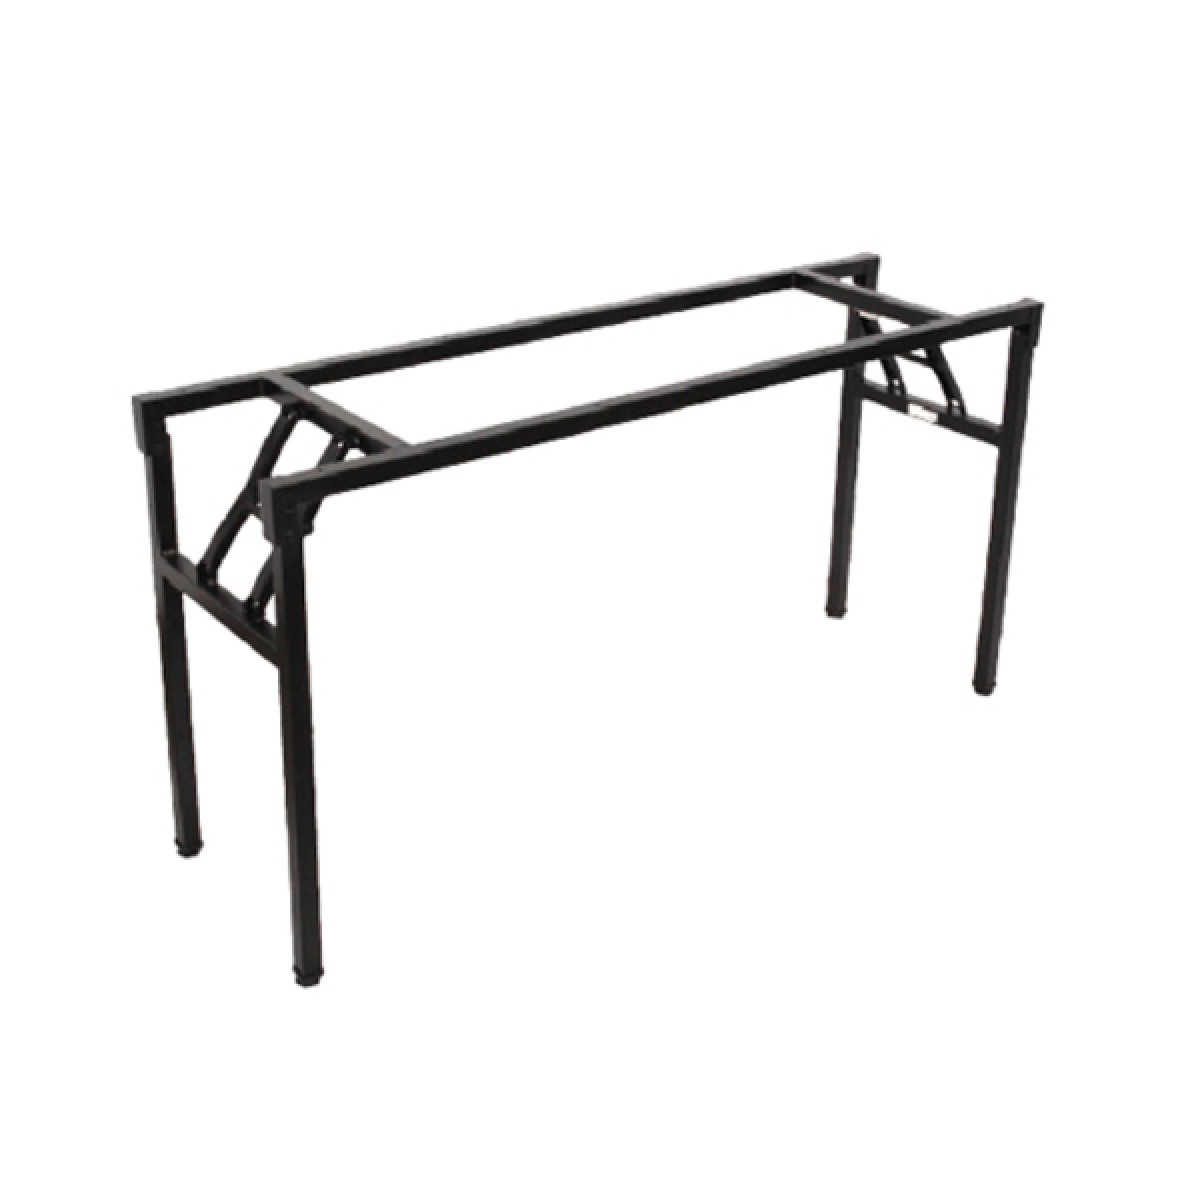 Steel Frame Folding Tressle Table Legs Only Resized 1200x1200 